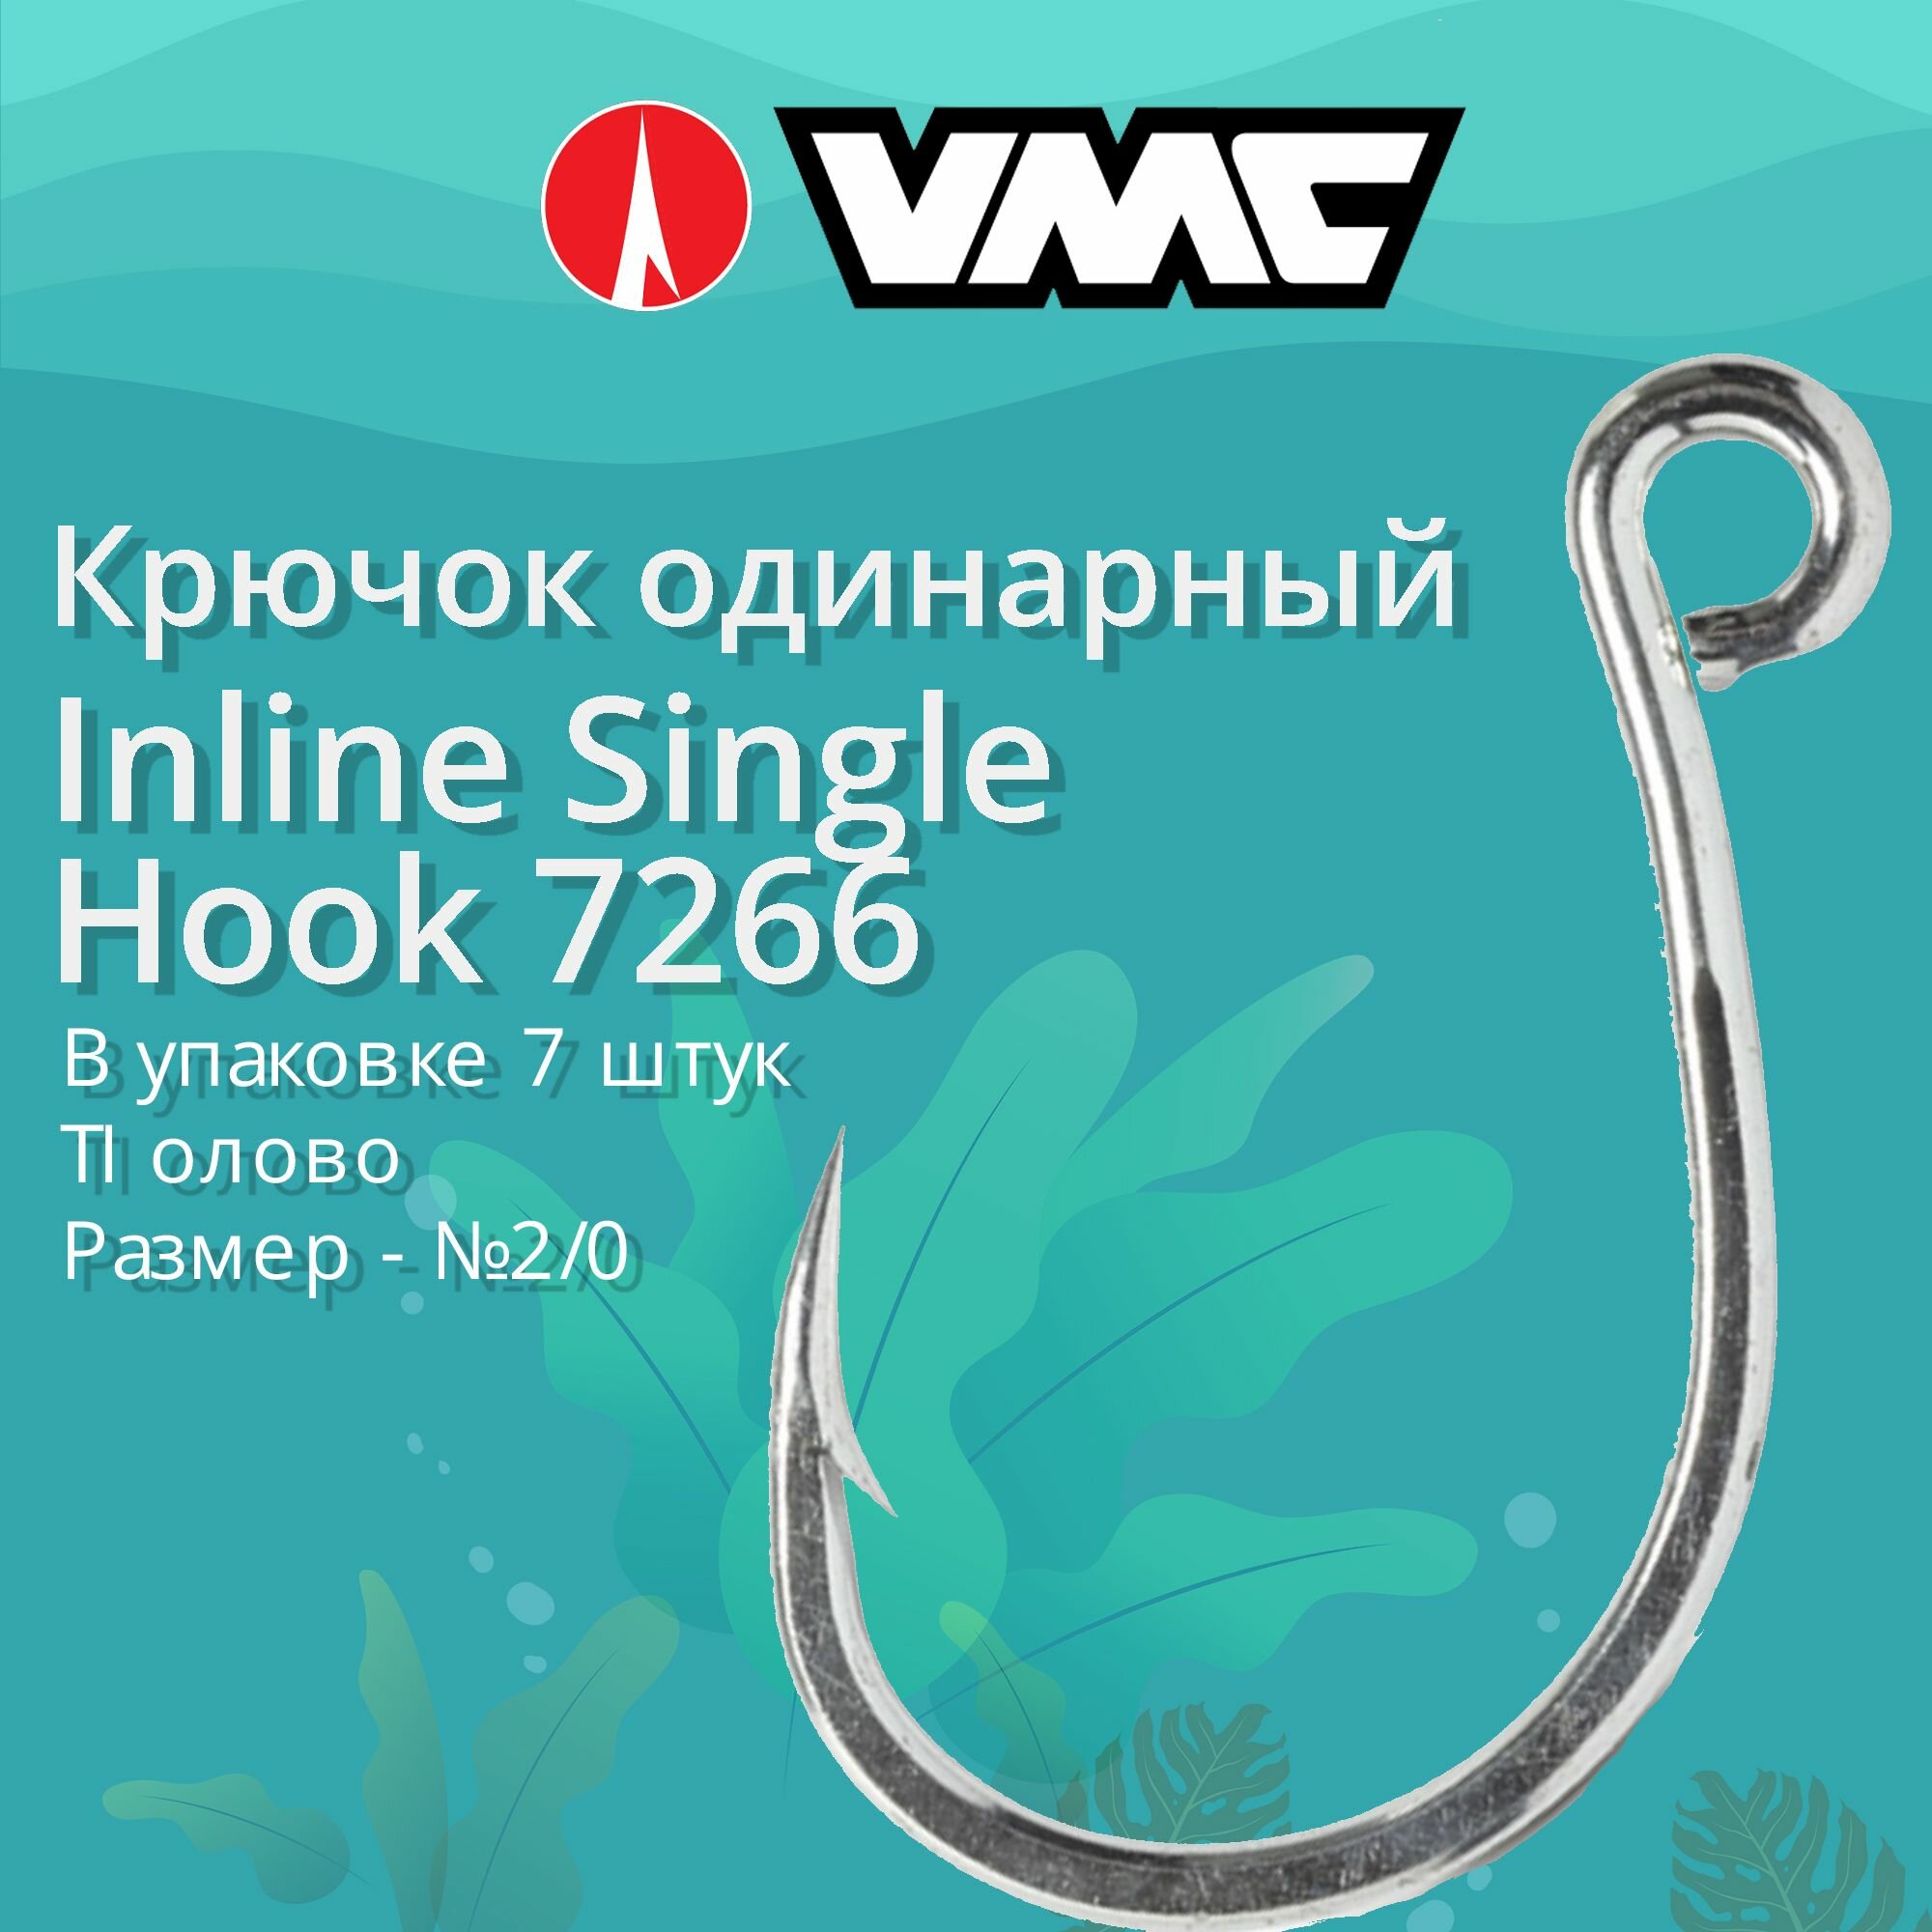 Крючки для рыбалки (одинарный) VMC Inline Single Hook 7266 TI (олово) №2/0, упаковка 7 штук